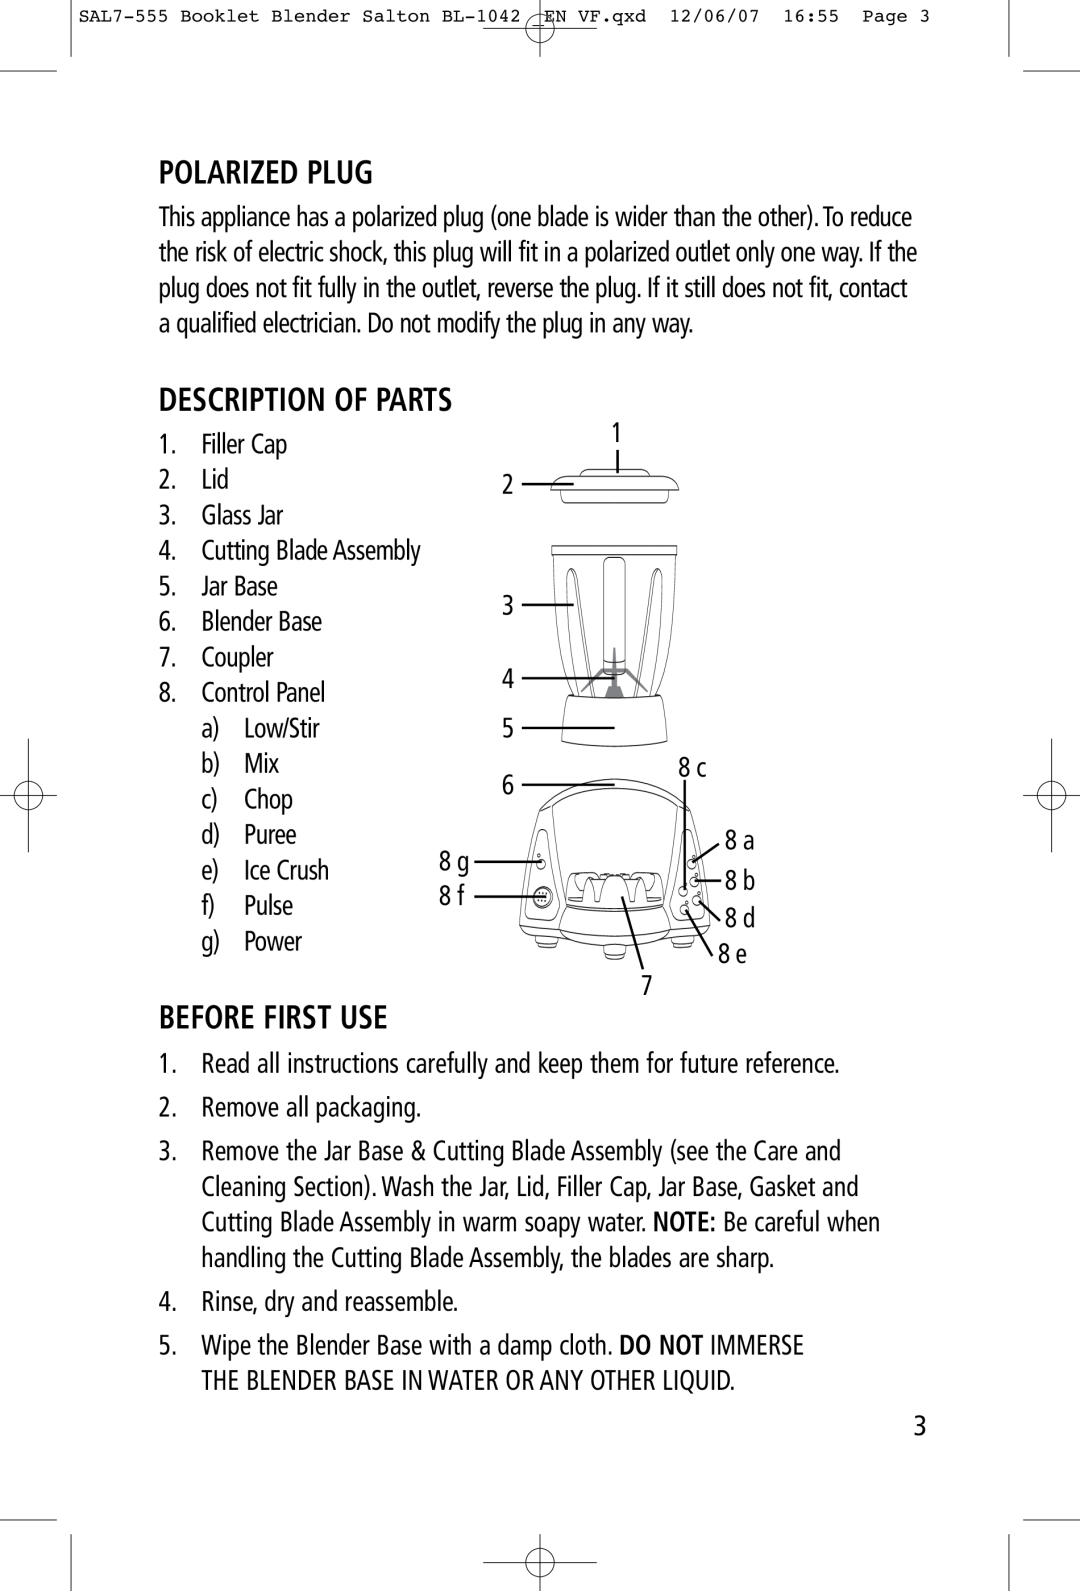 Salton BL-1042 manual Polarized Plug, Description Of Parts, Before First Use 